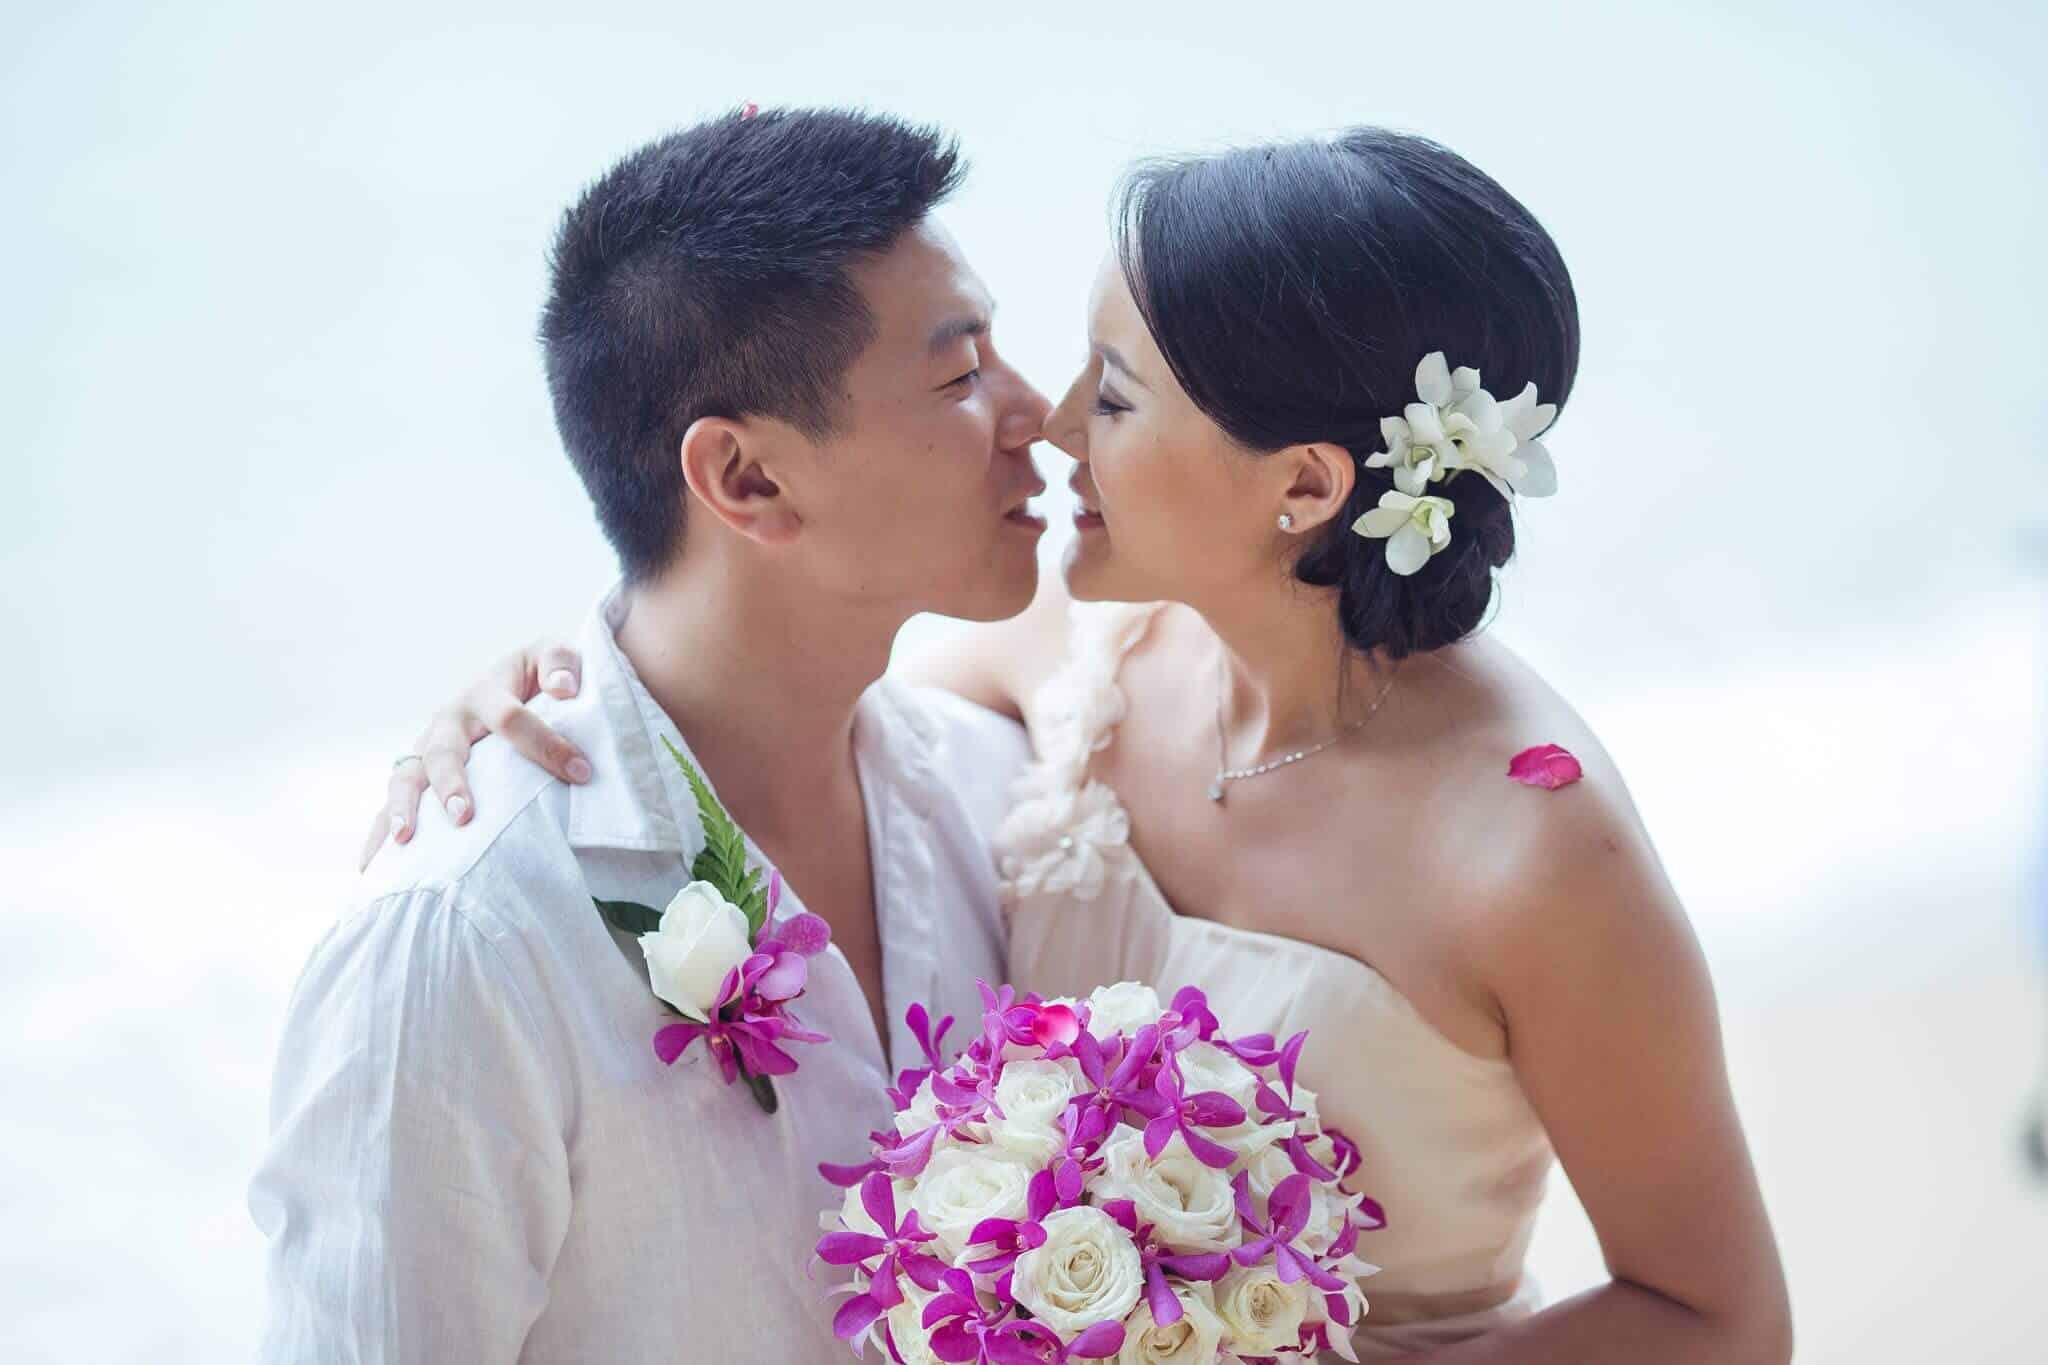 Phuket Beach Wedding - Kiss Bride and Groom